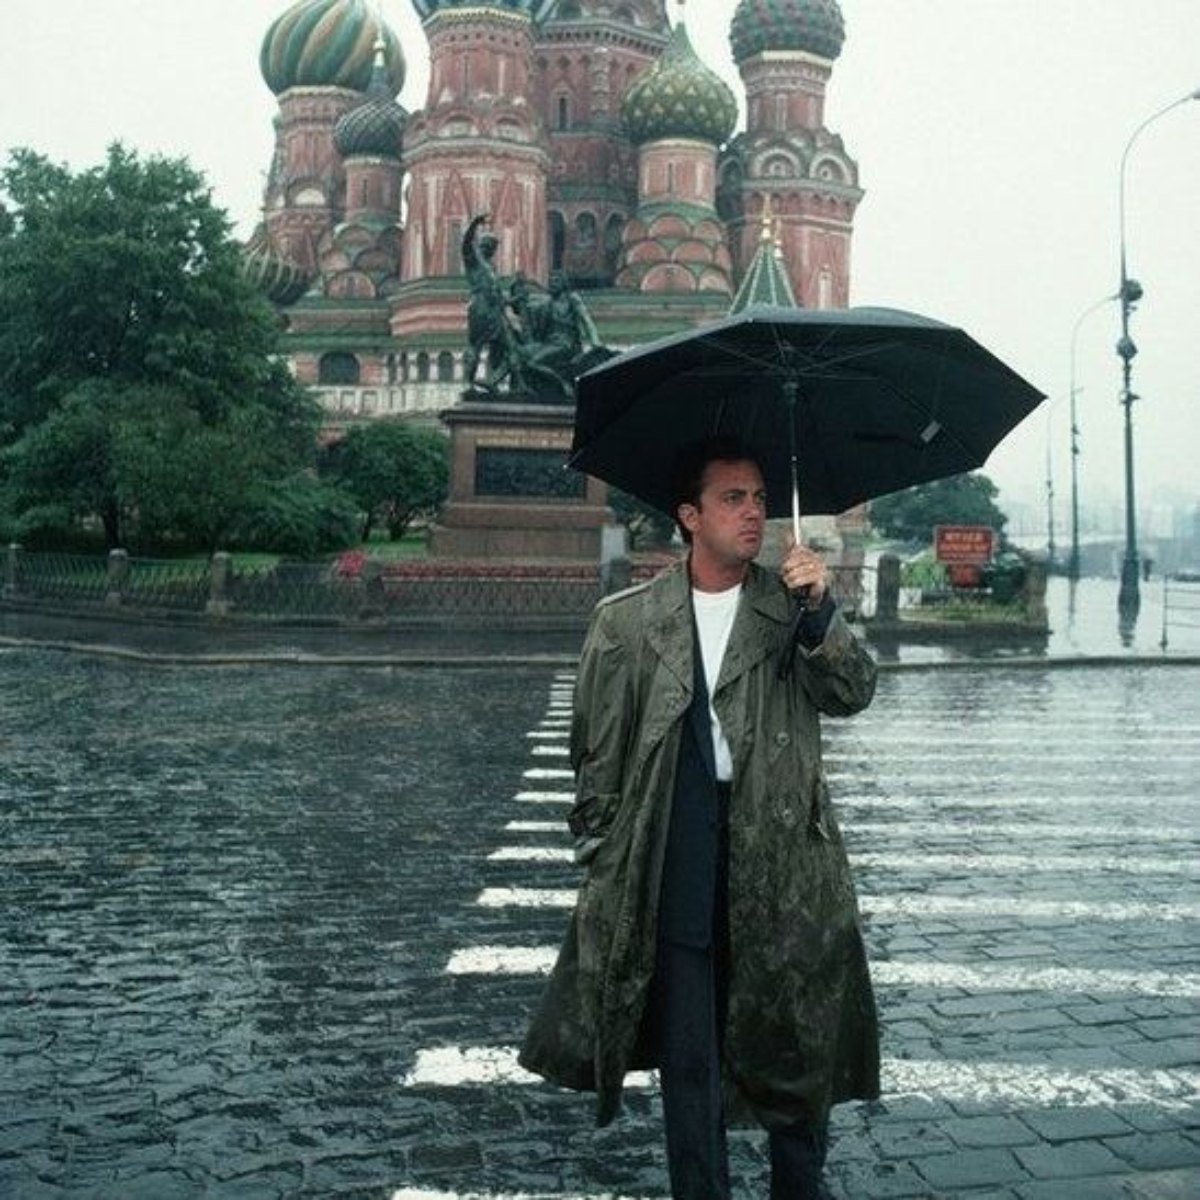 Billy Joel in Moscow!